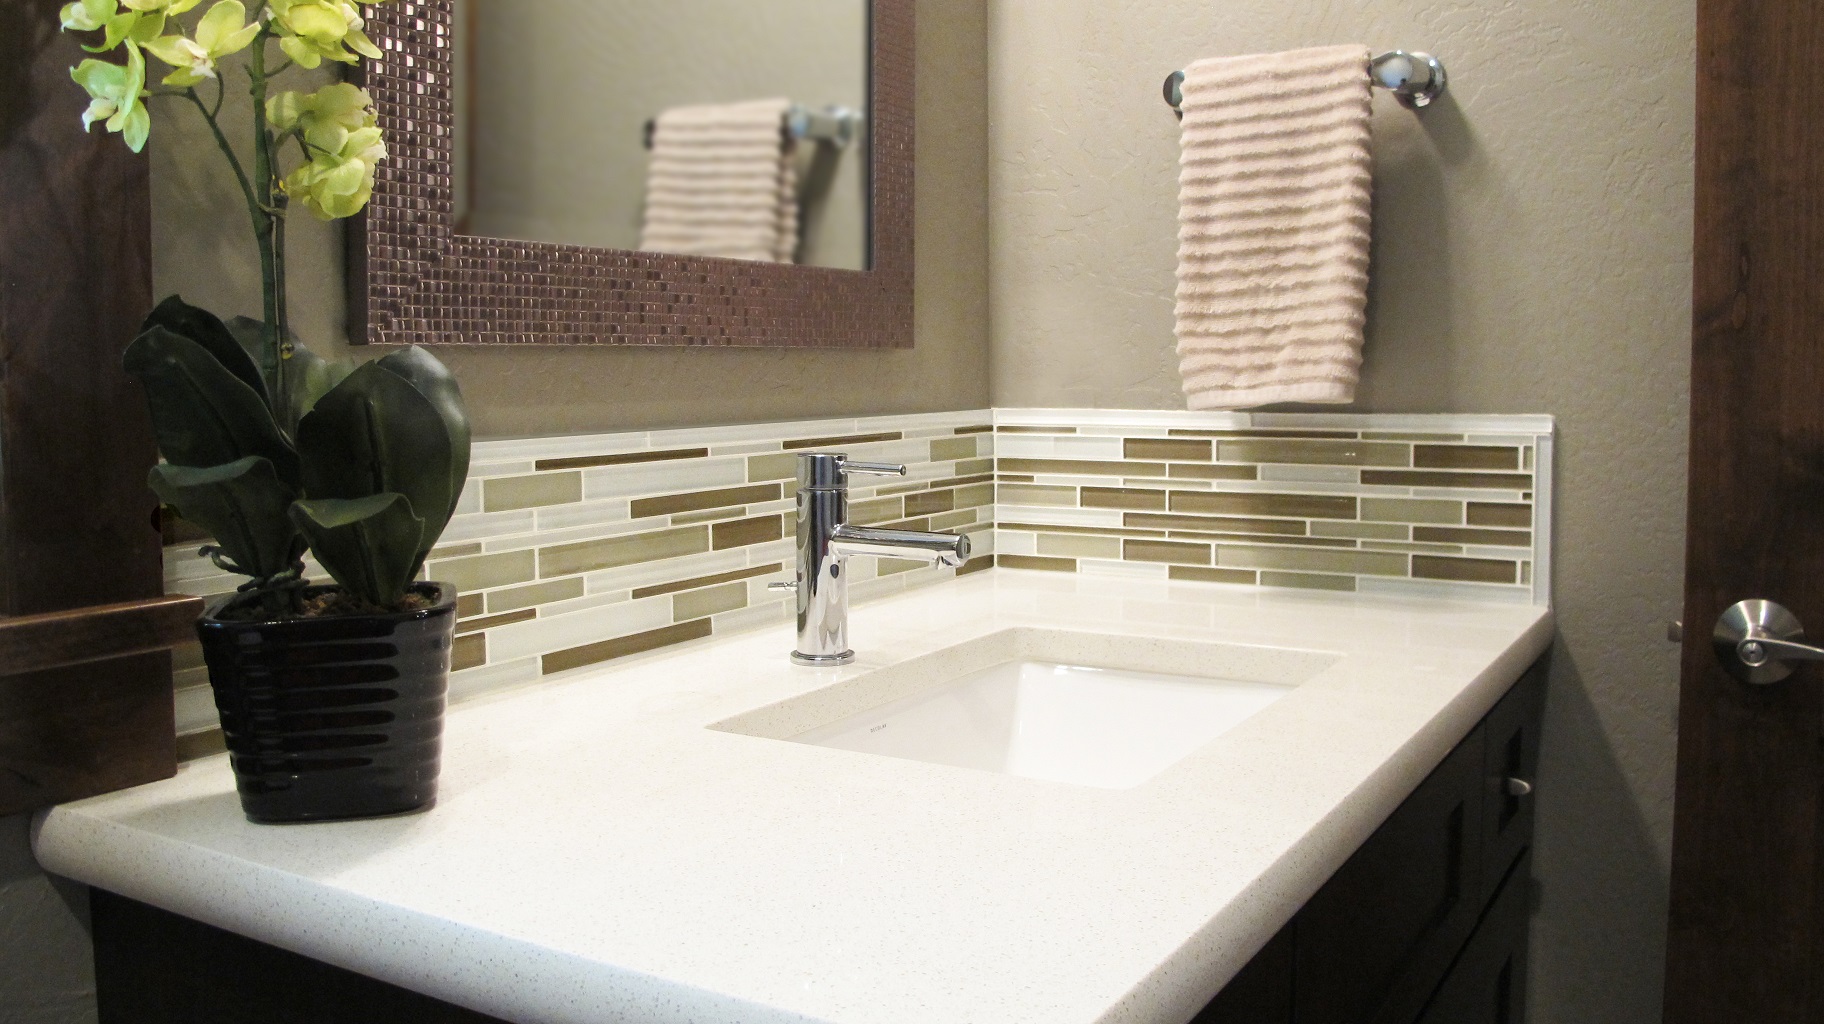 Powder bathroom vanity LG Viatera Quartz cashmere undermount sink porcelain kohler Glazzio Tile Random interlocking mosaic glass Marble Canyon